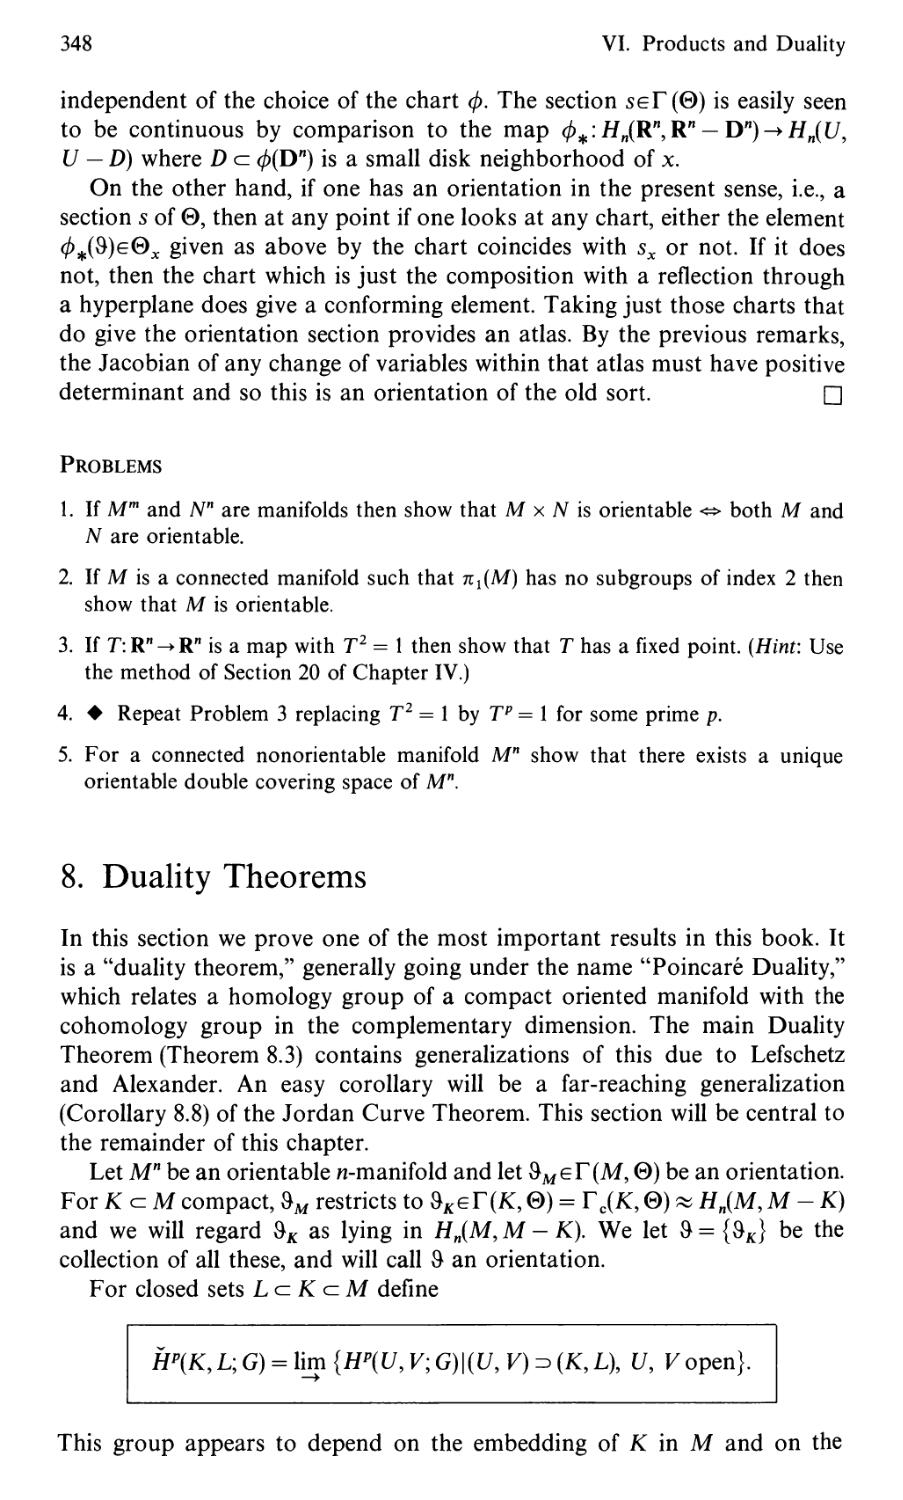 8. Duality Theorems